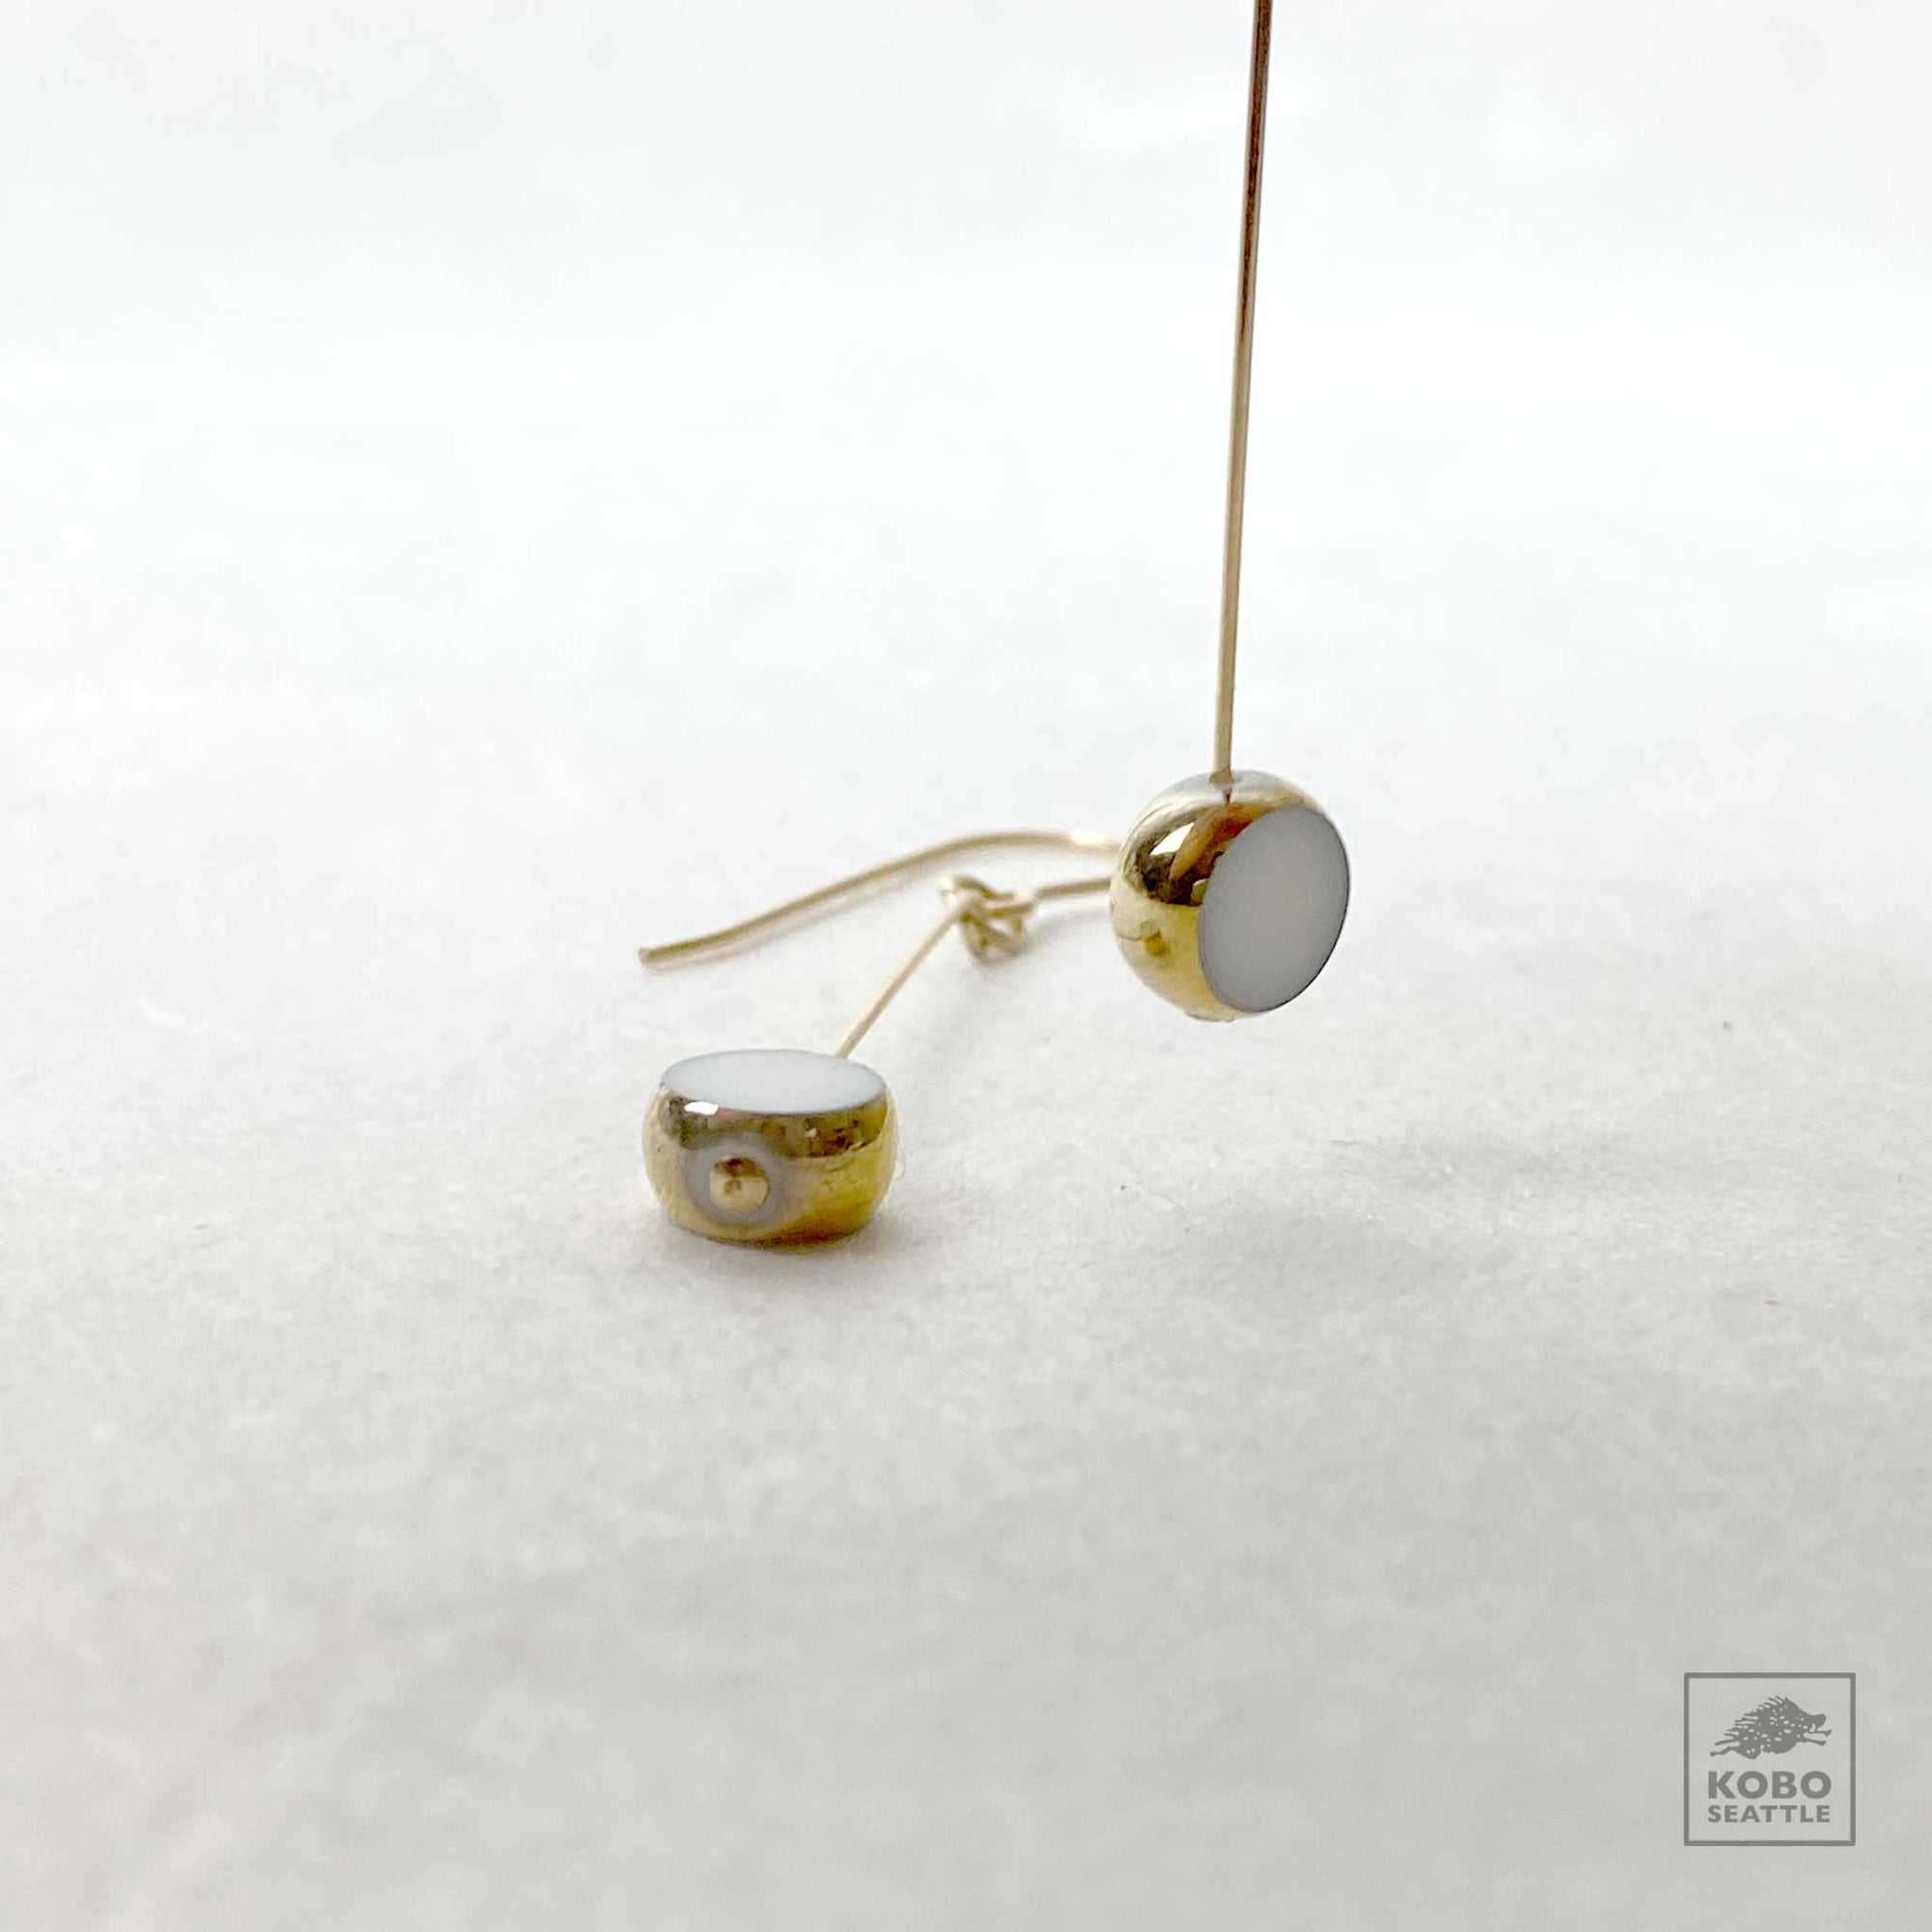 Glass Bead Earrings - Small White Circle